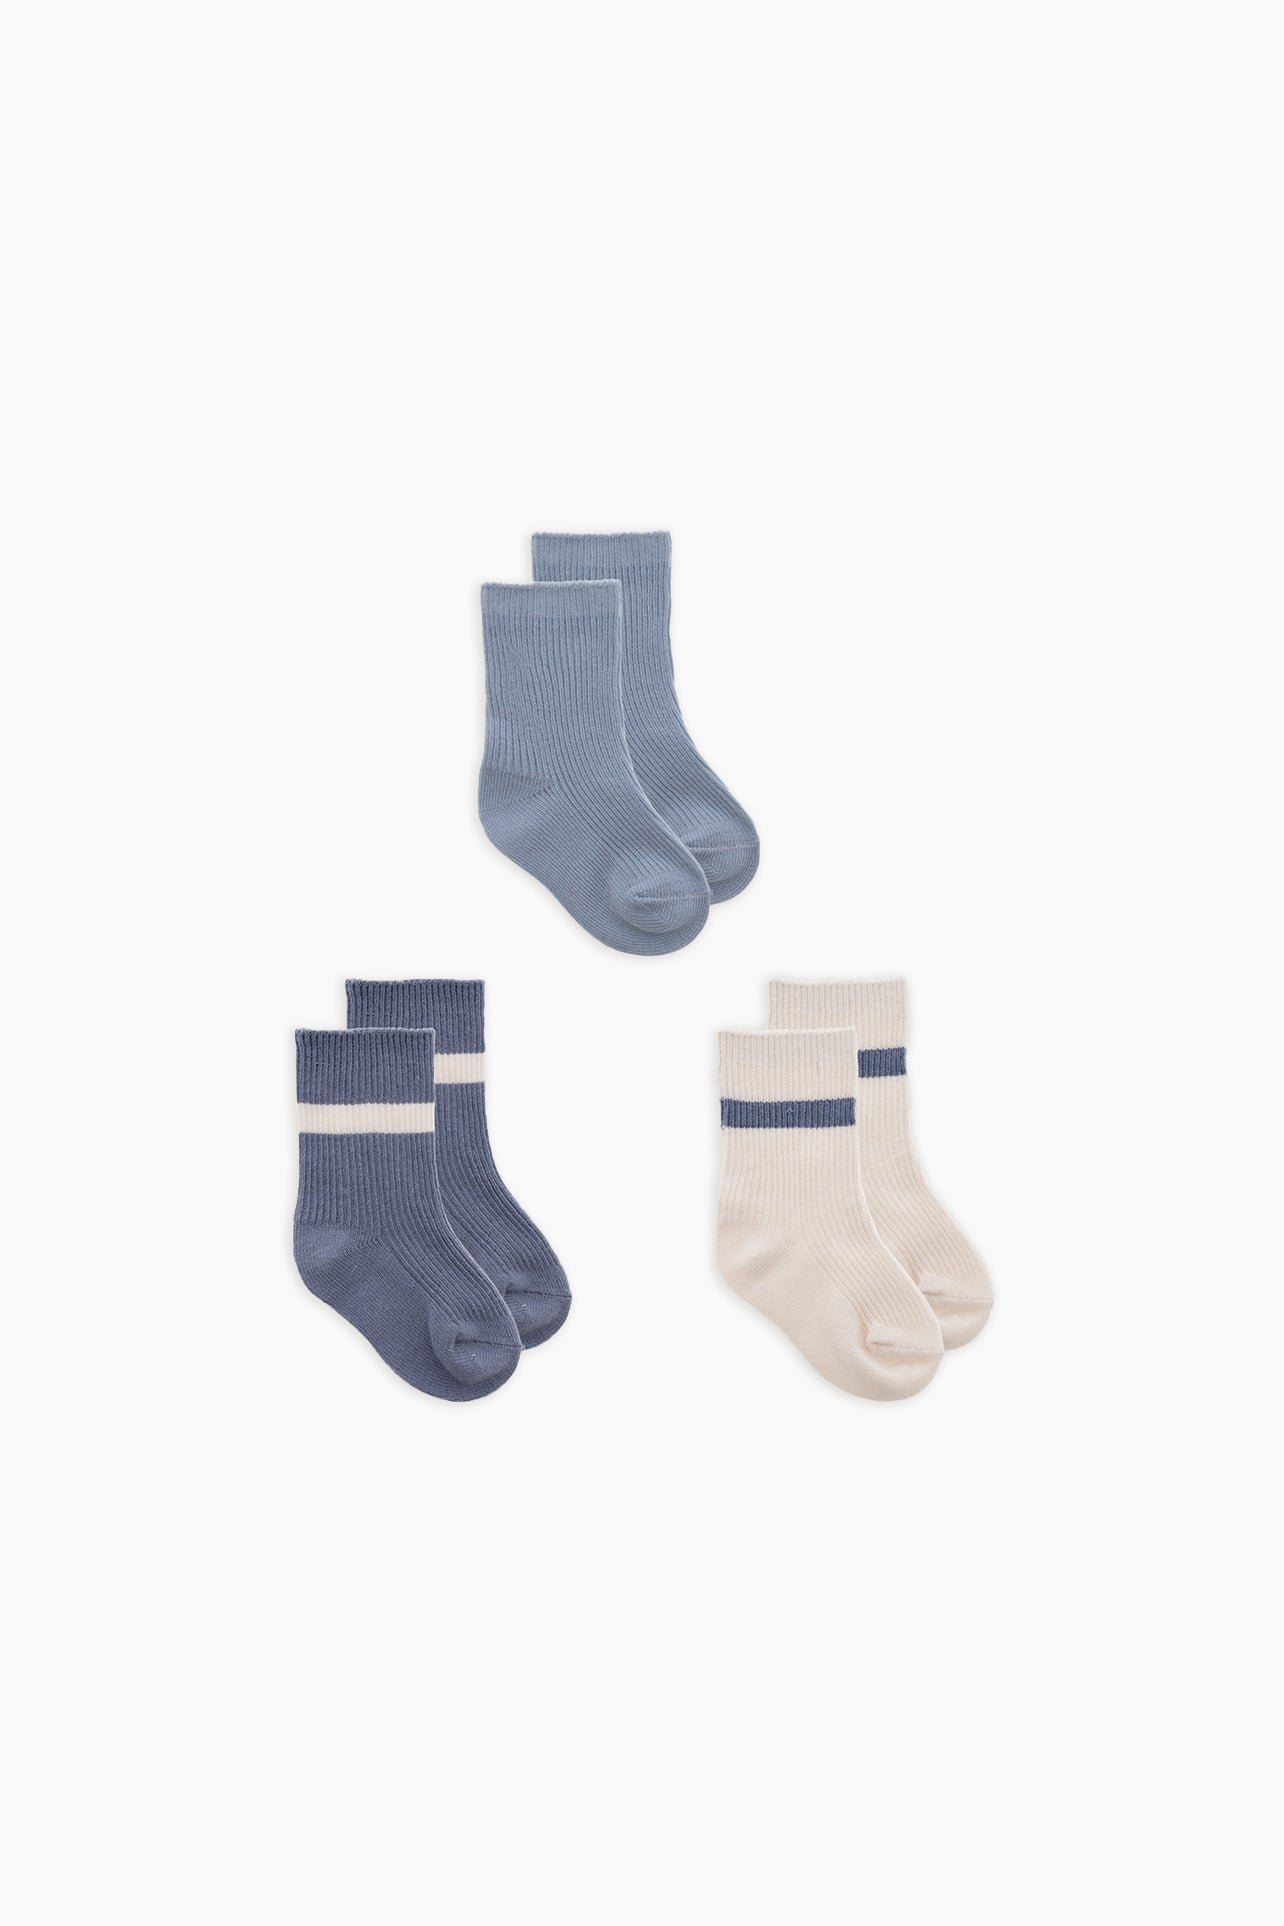 Snugabye Organic 3-Pack Baby Crew Socks - Folkstone Grey